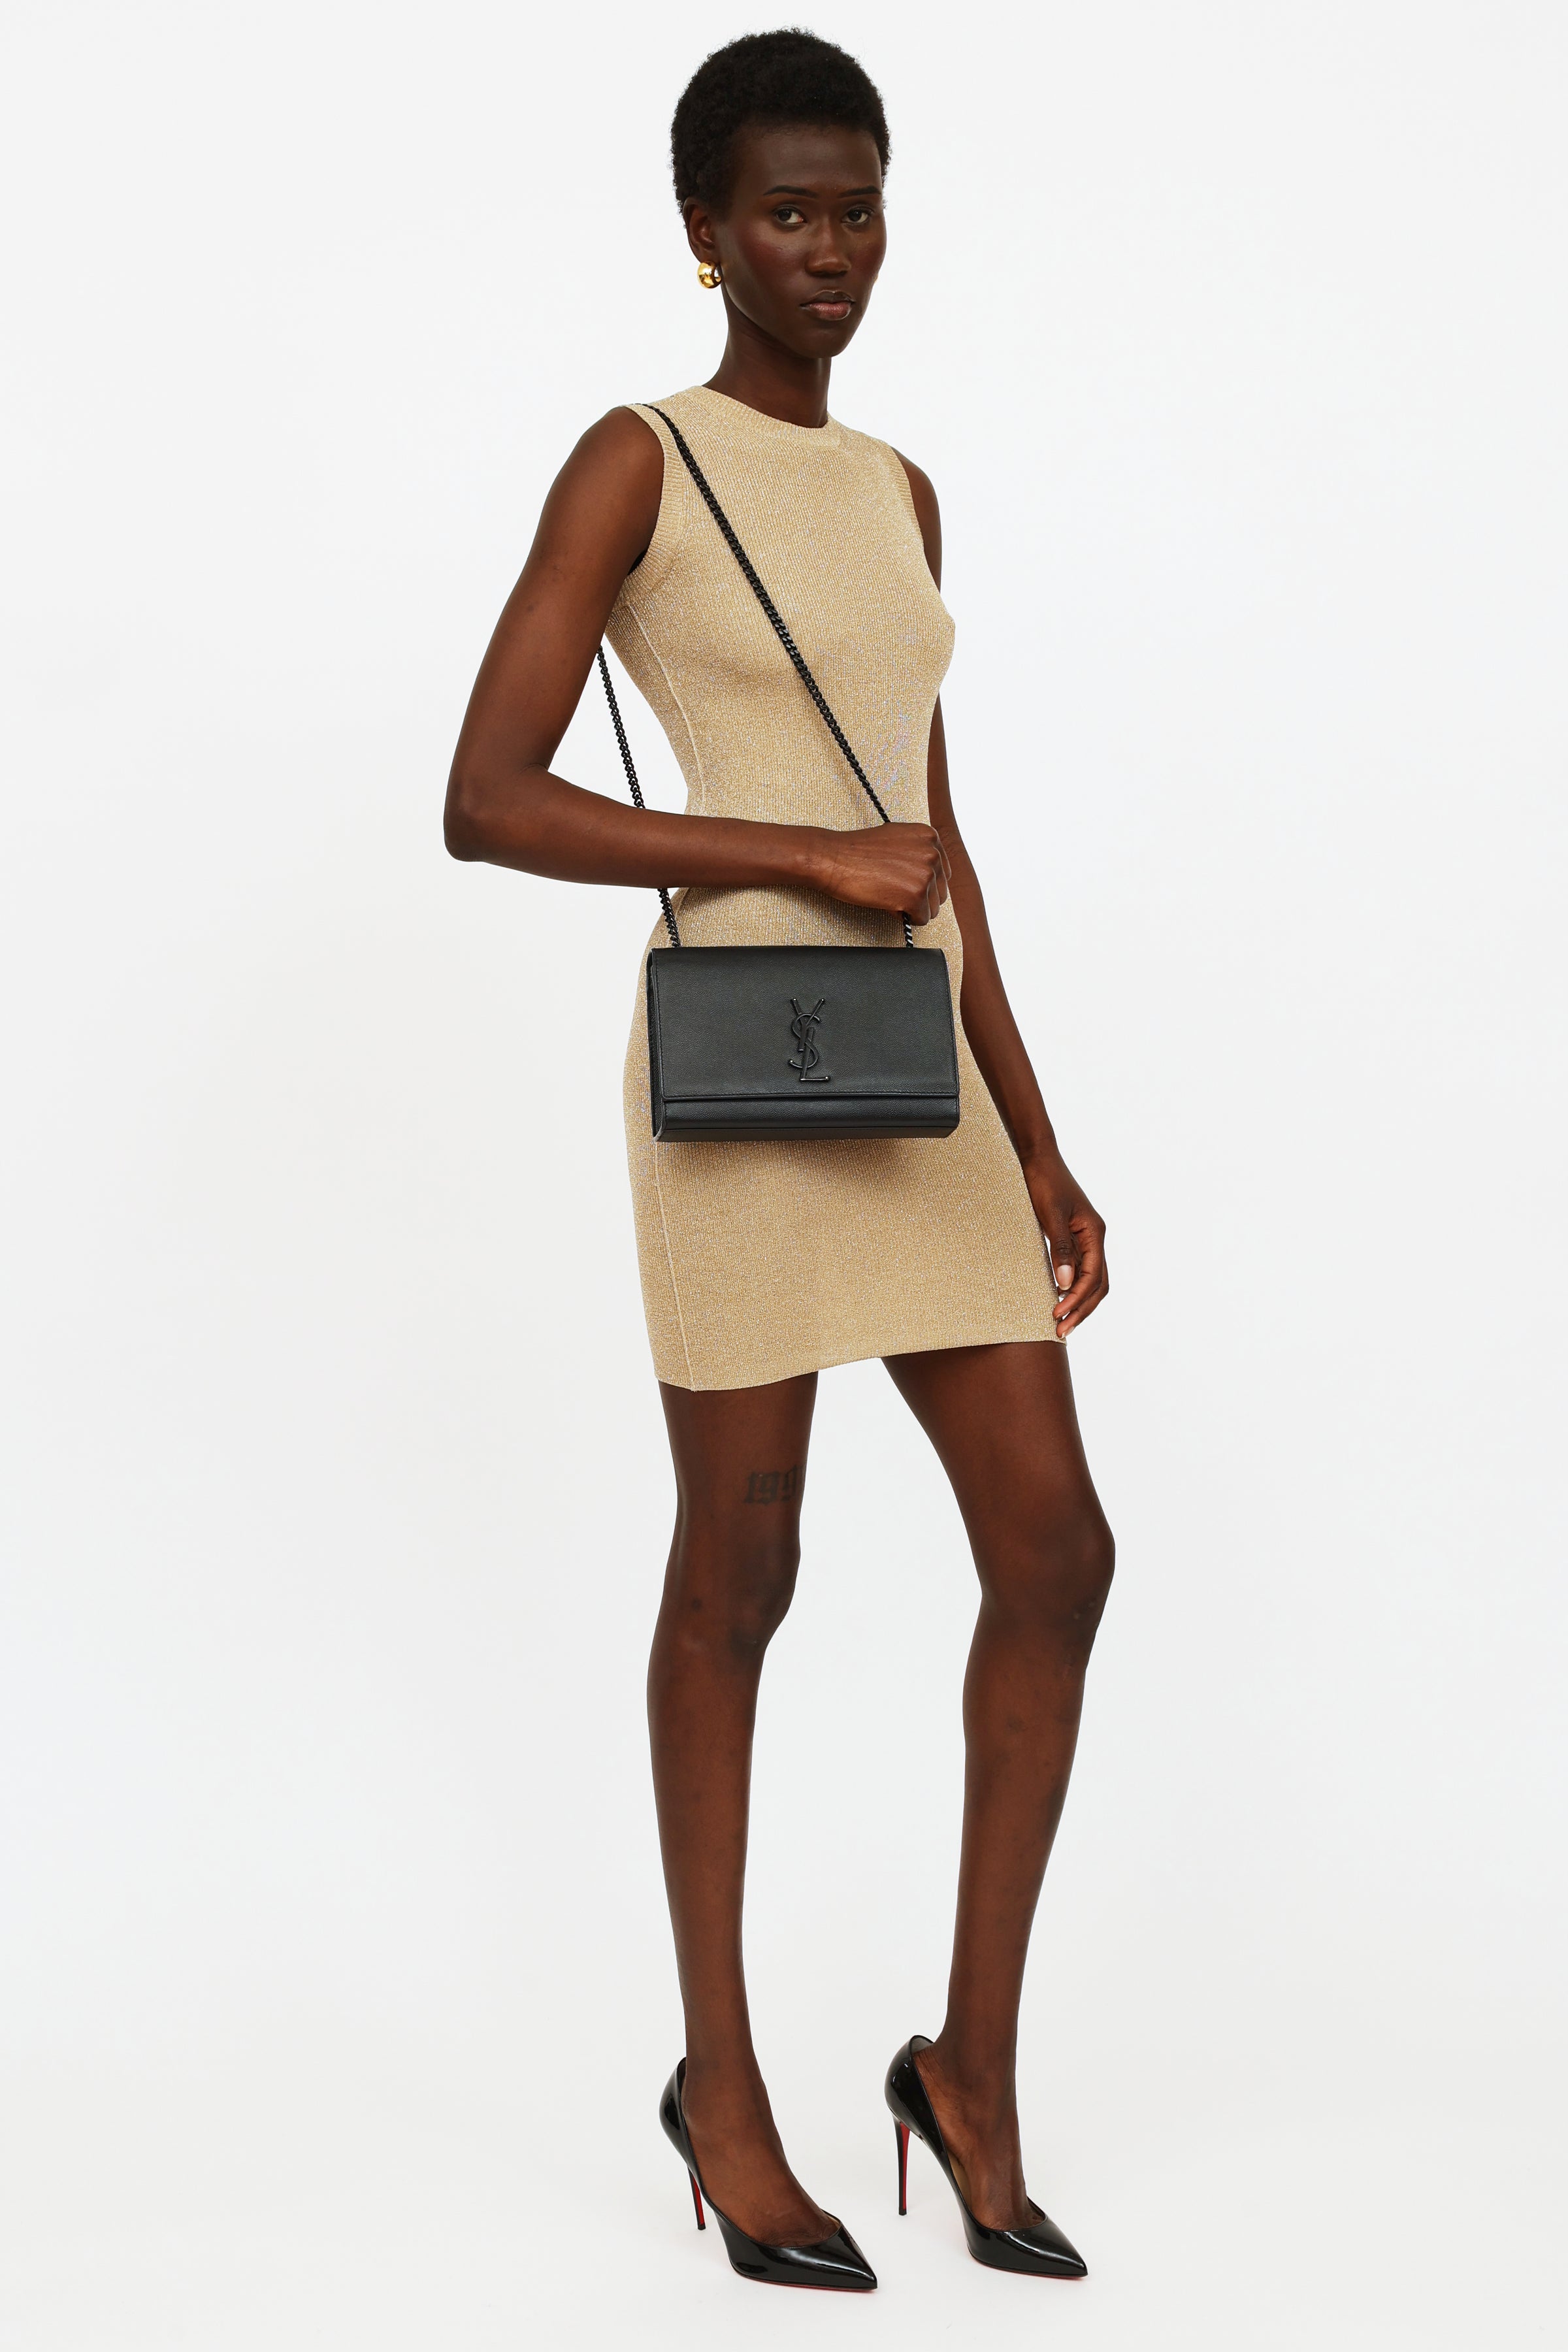 SAINT LAURENT: Kate bag in polka dot leather - Pink  Saint Laurent  crossbody bags 469390 2Q80W online at